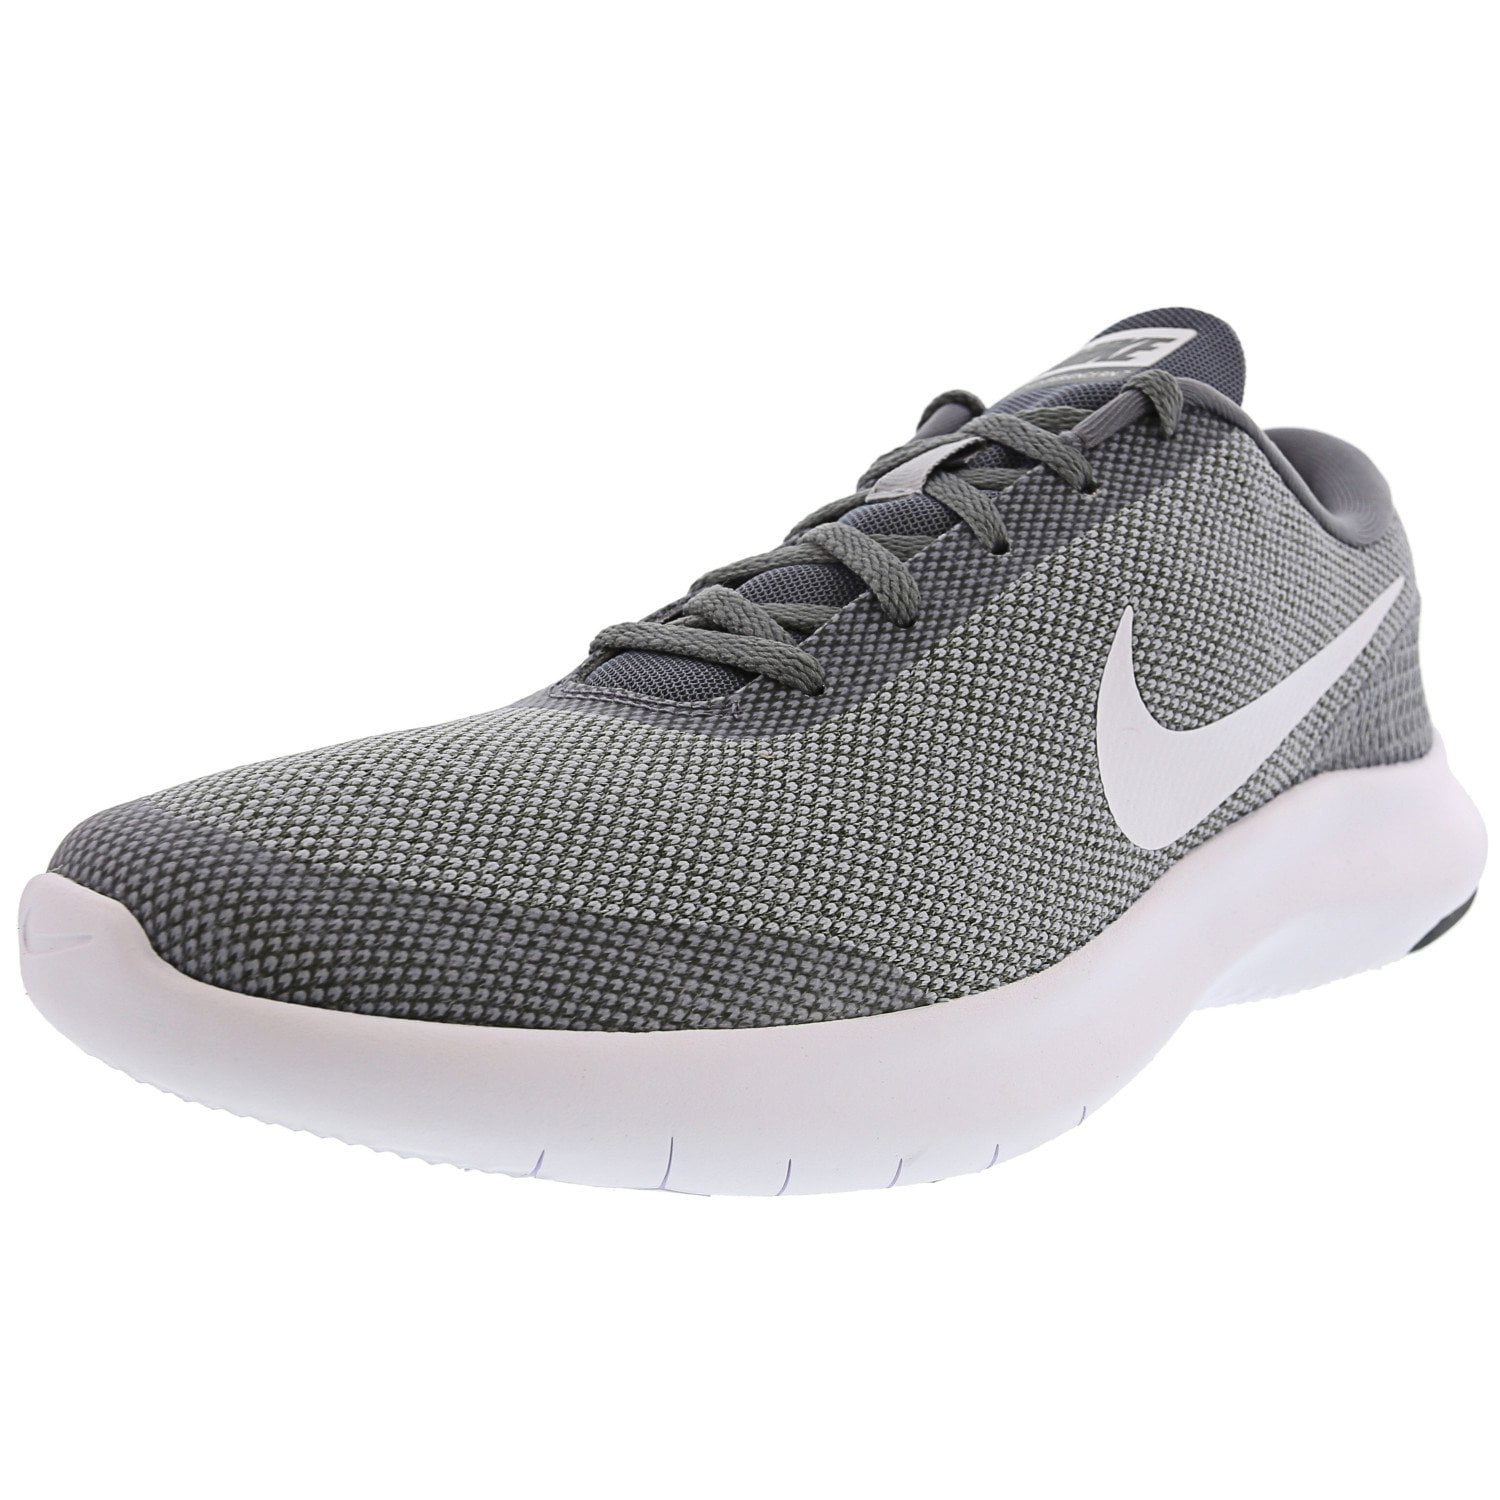 Nike Flex 7 Men?s Running Shoes - 10.5M - Wolf Grey / White / Cool Grey -